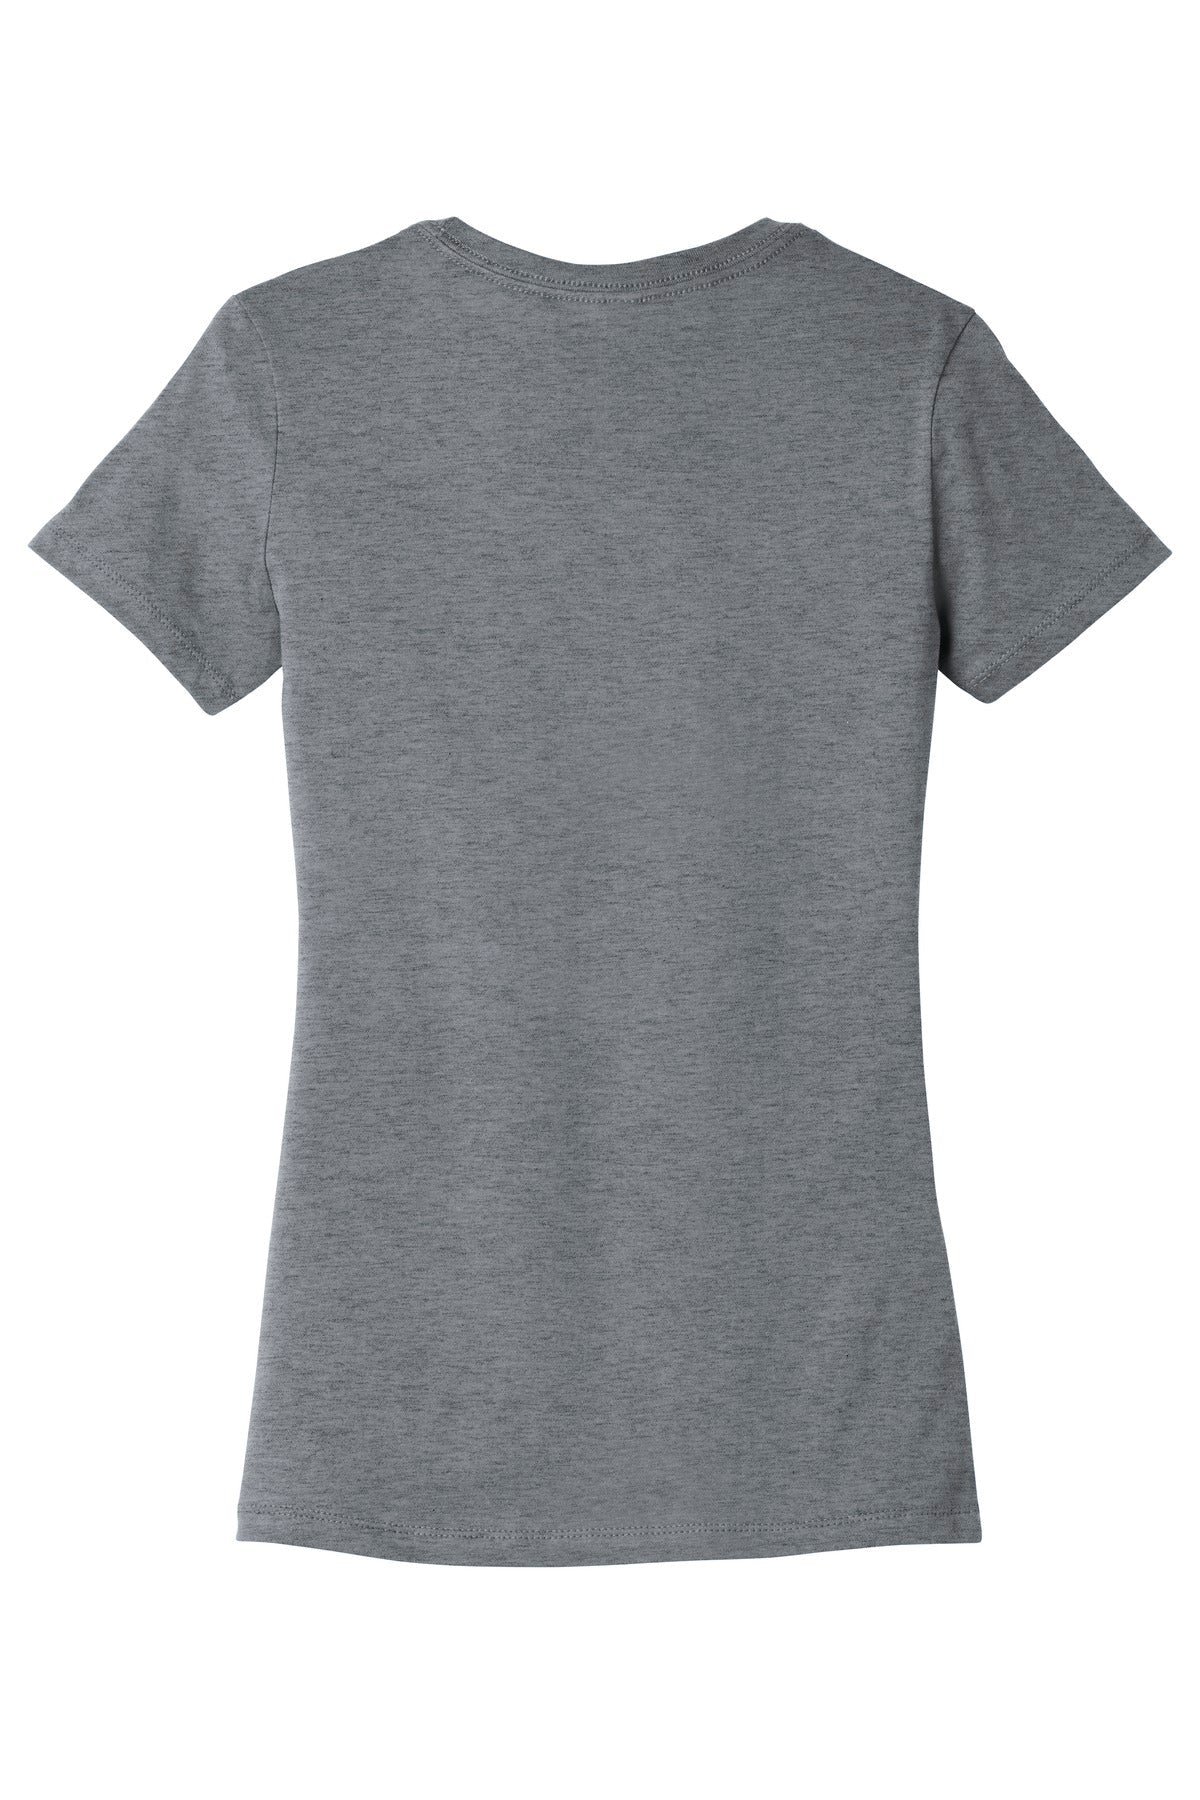 BELLA+CANVAS Women's Slim Fit Tee. BC6004 - BT Imprintables Shirts